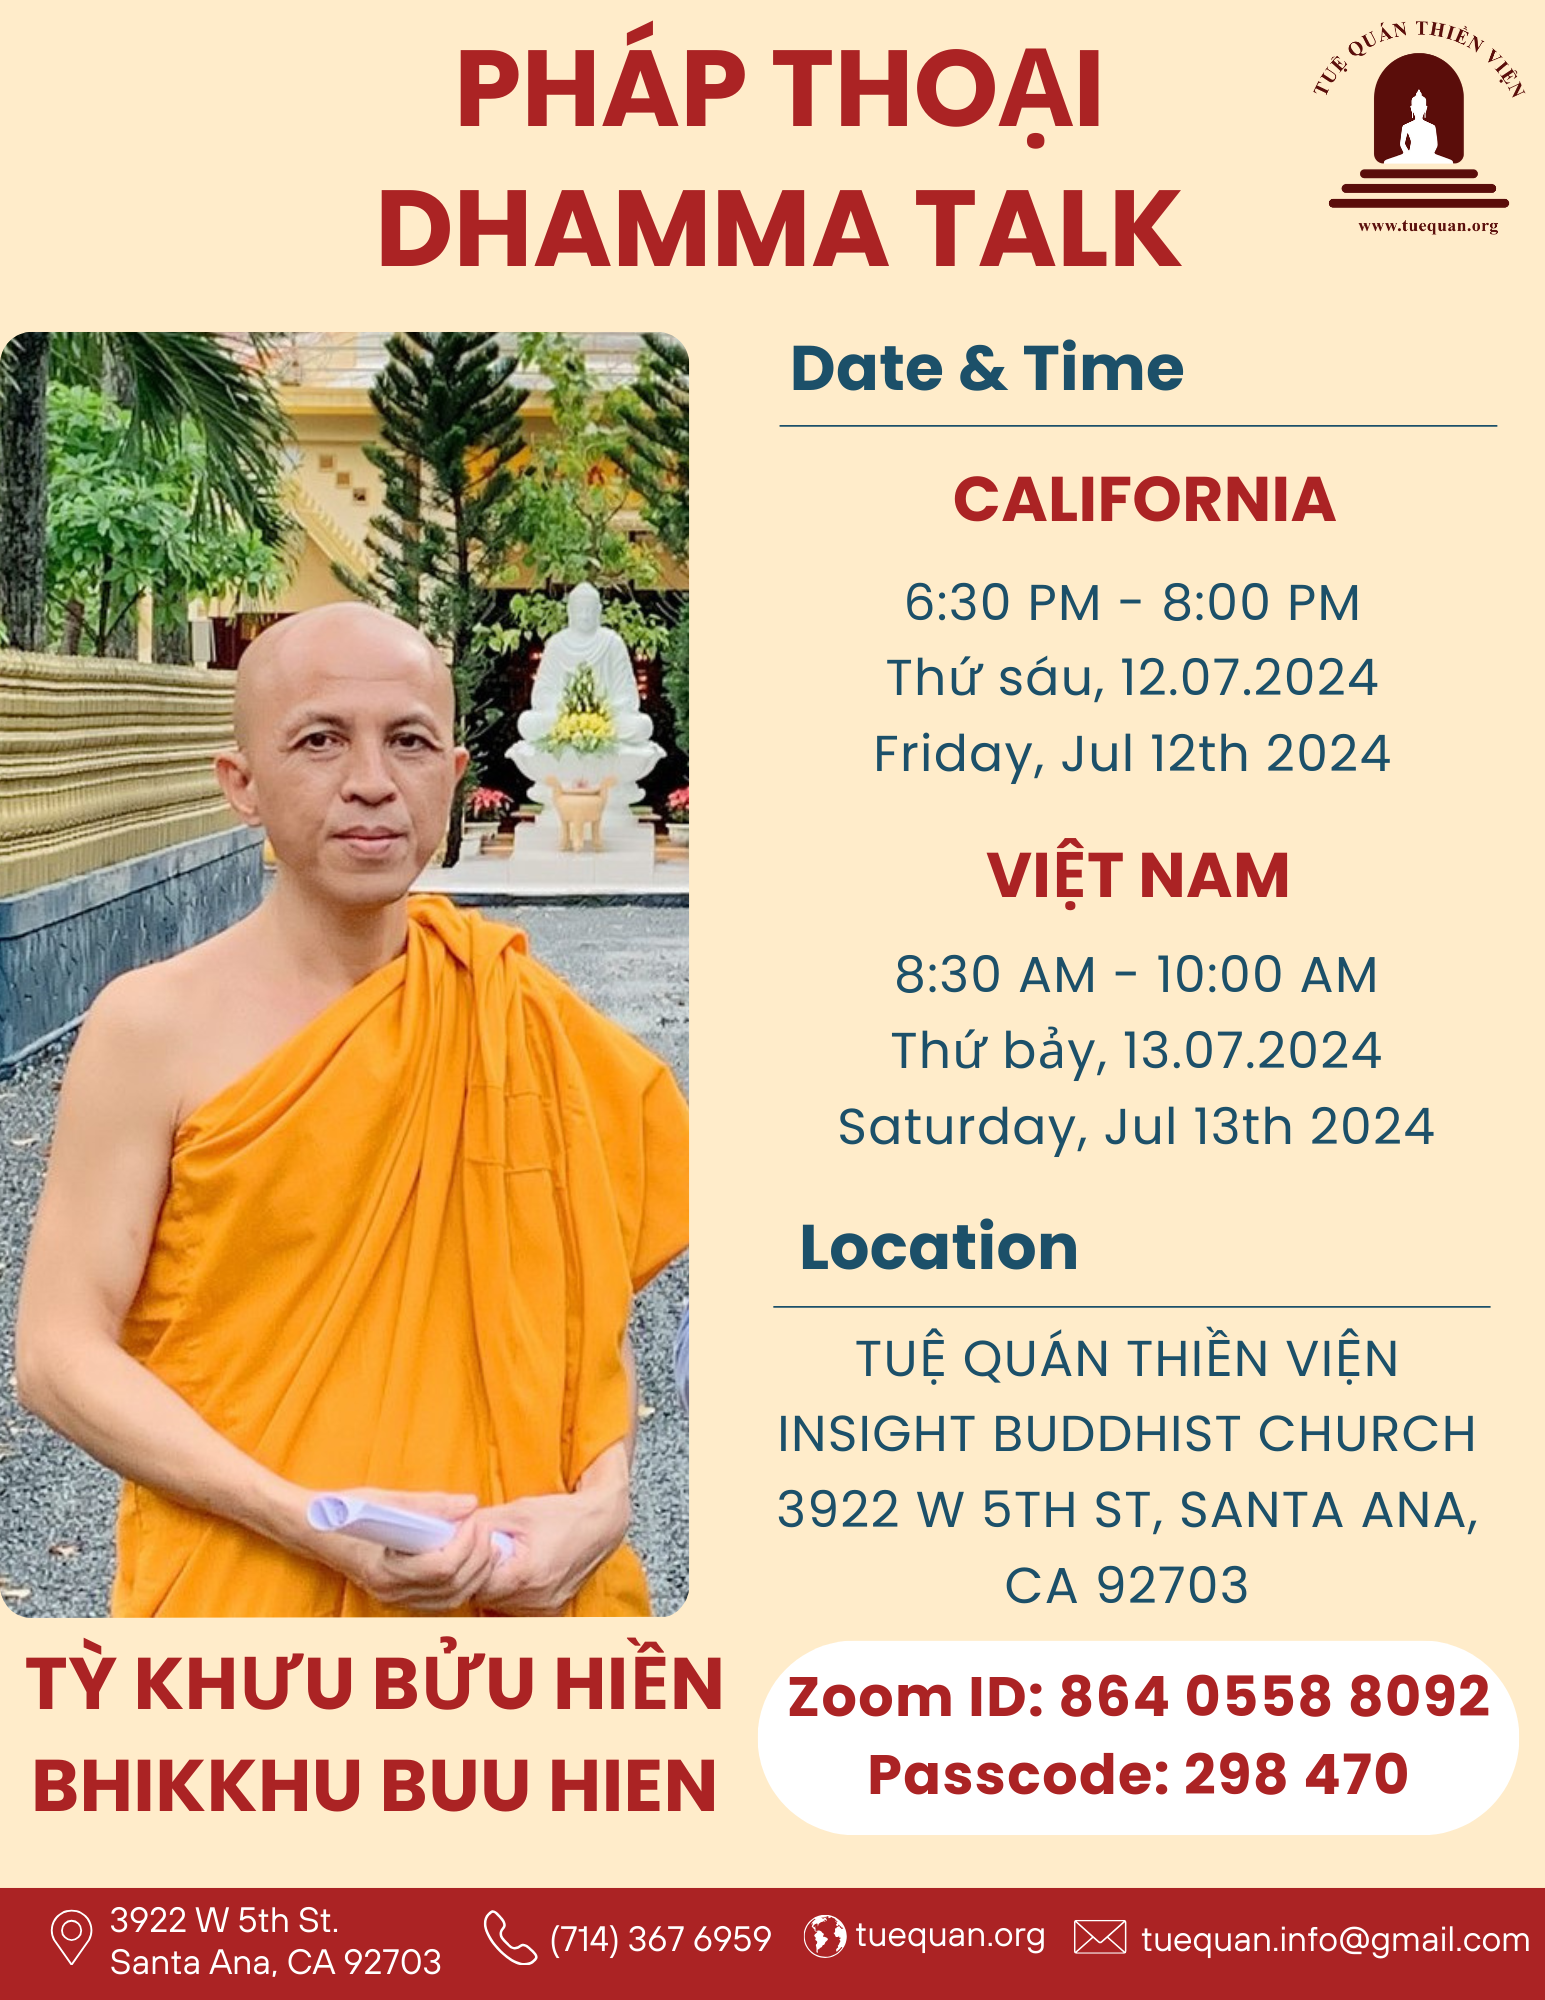 Friday Dhamma talk, Jul 12th 2024